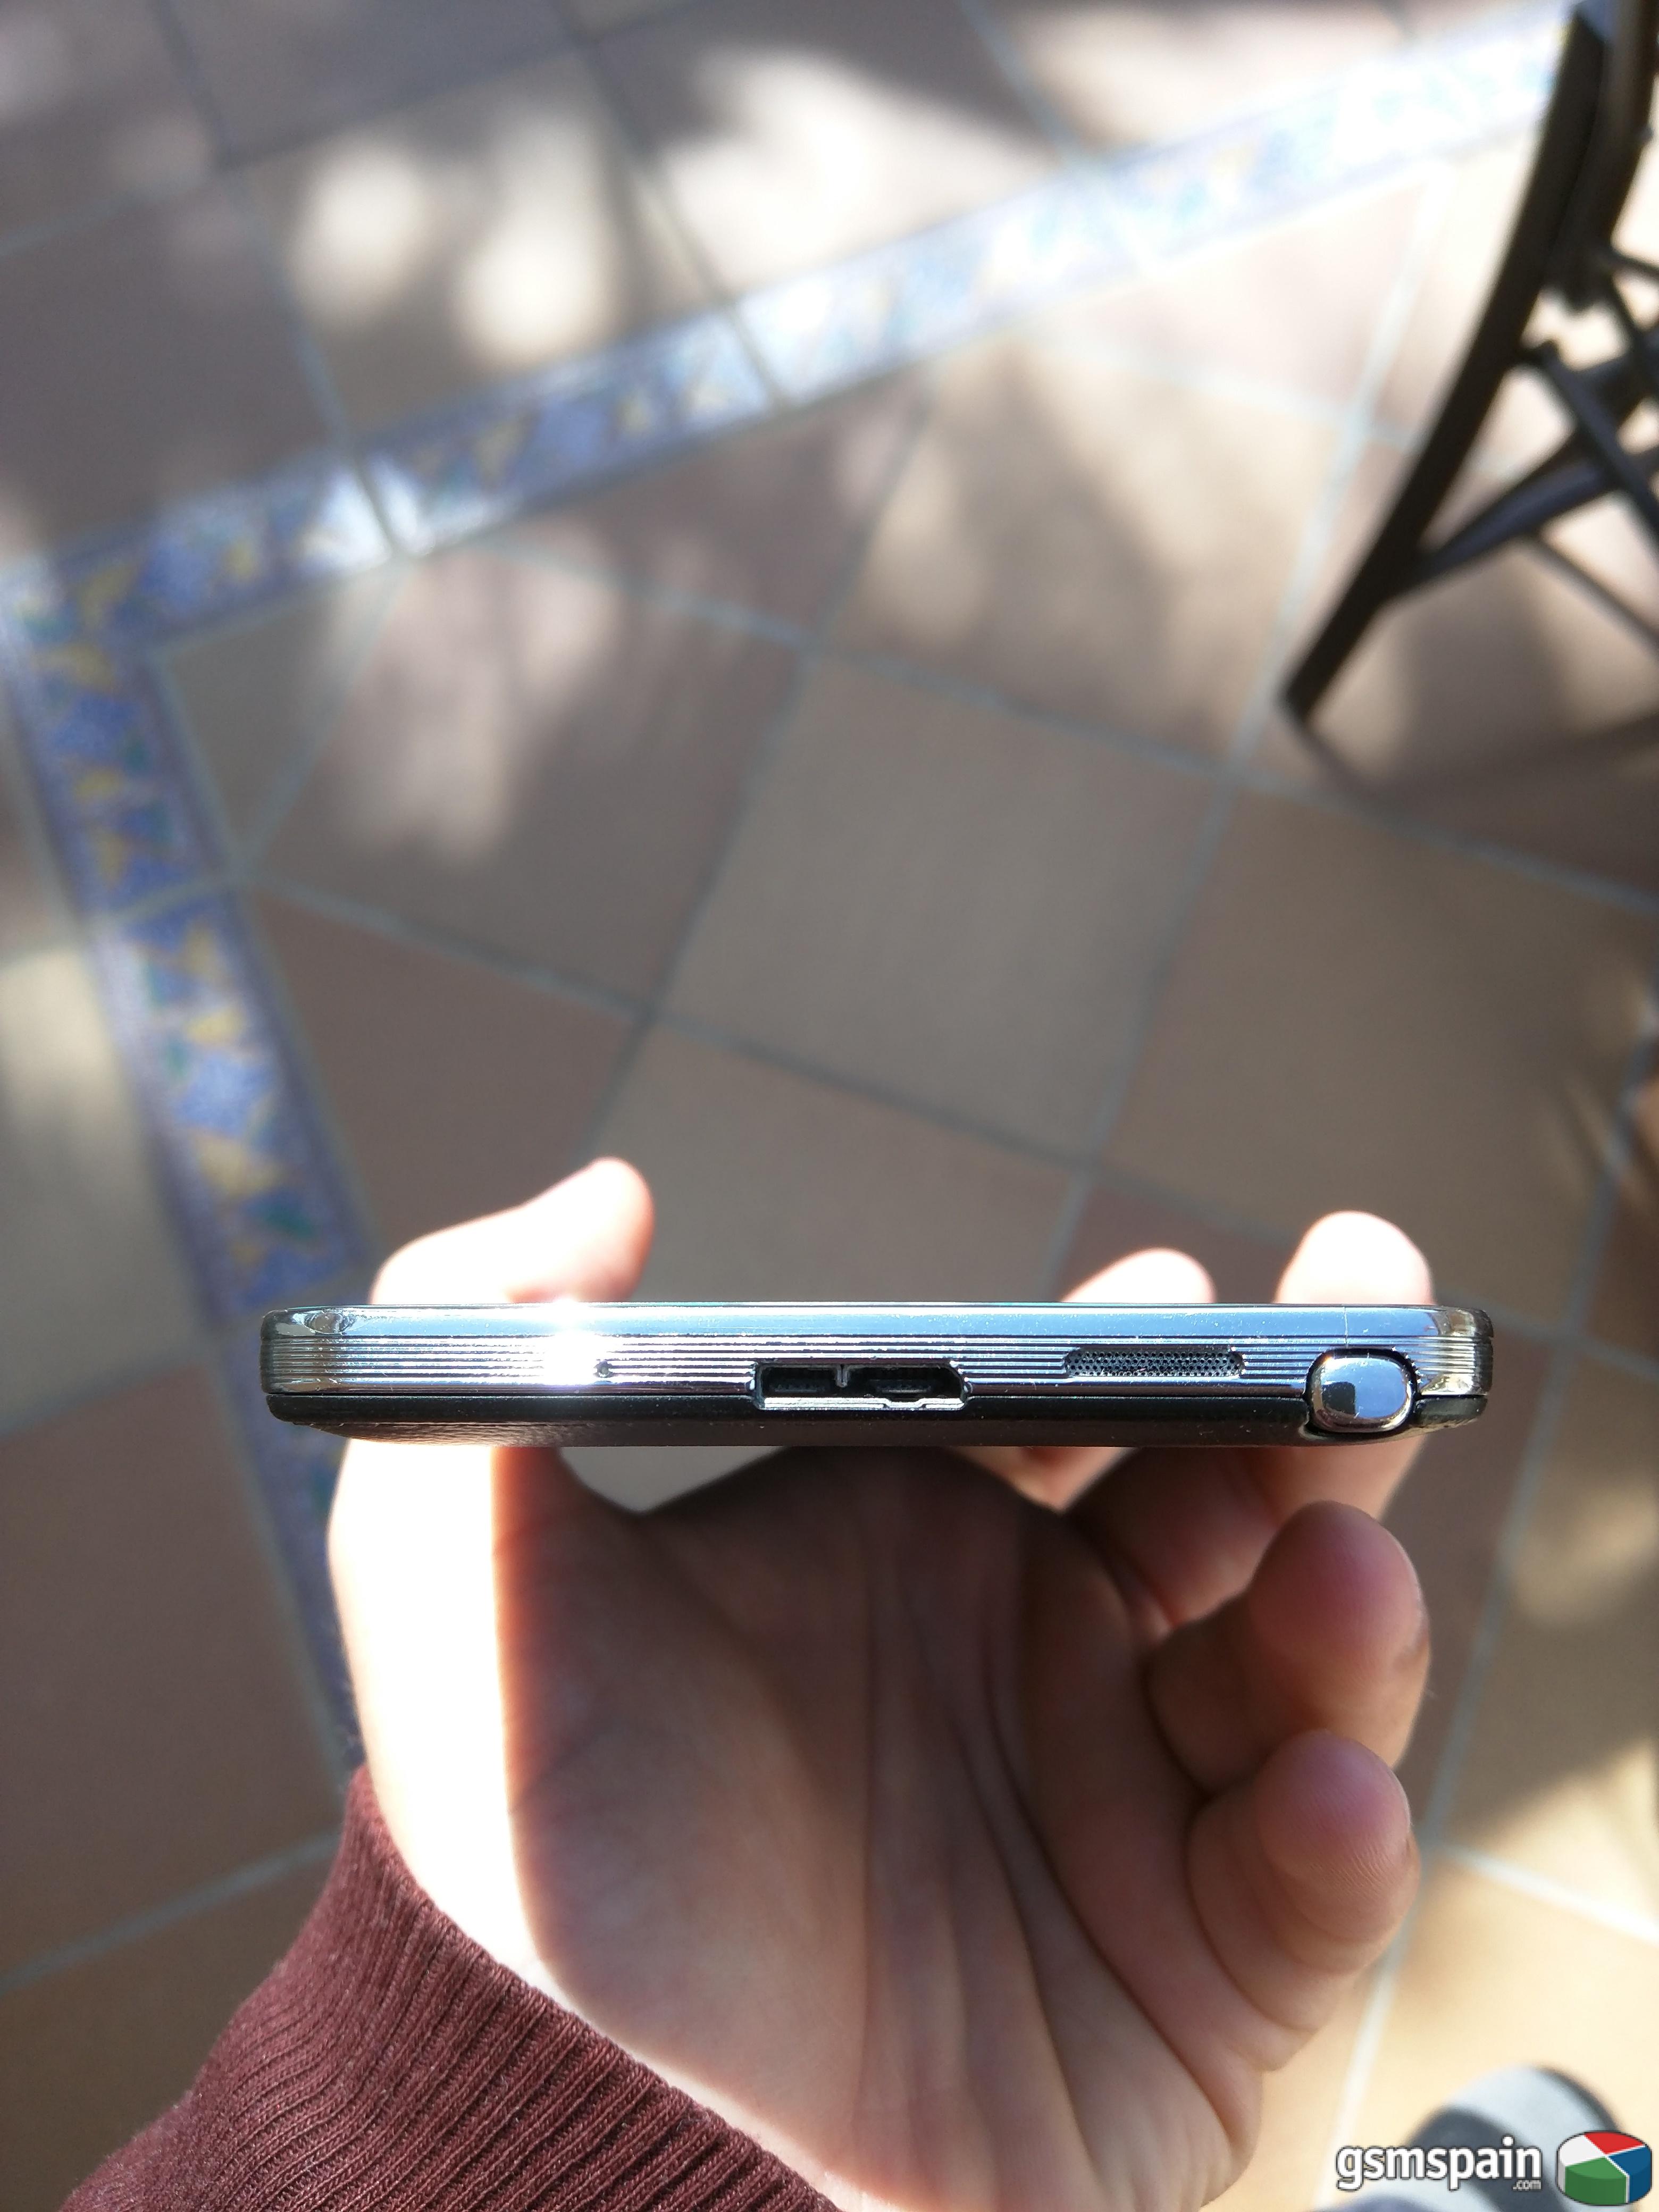 [VENDO] MEGAPACK Samsung Galaxy Note 3